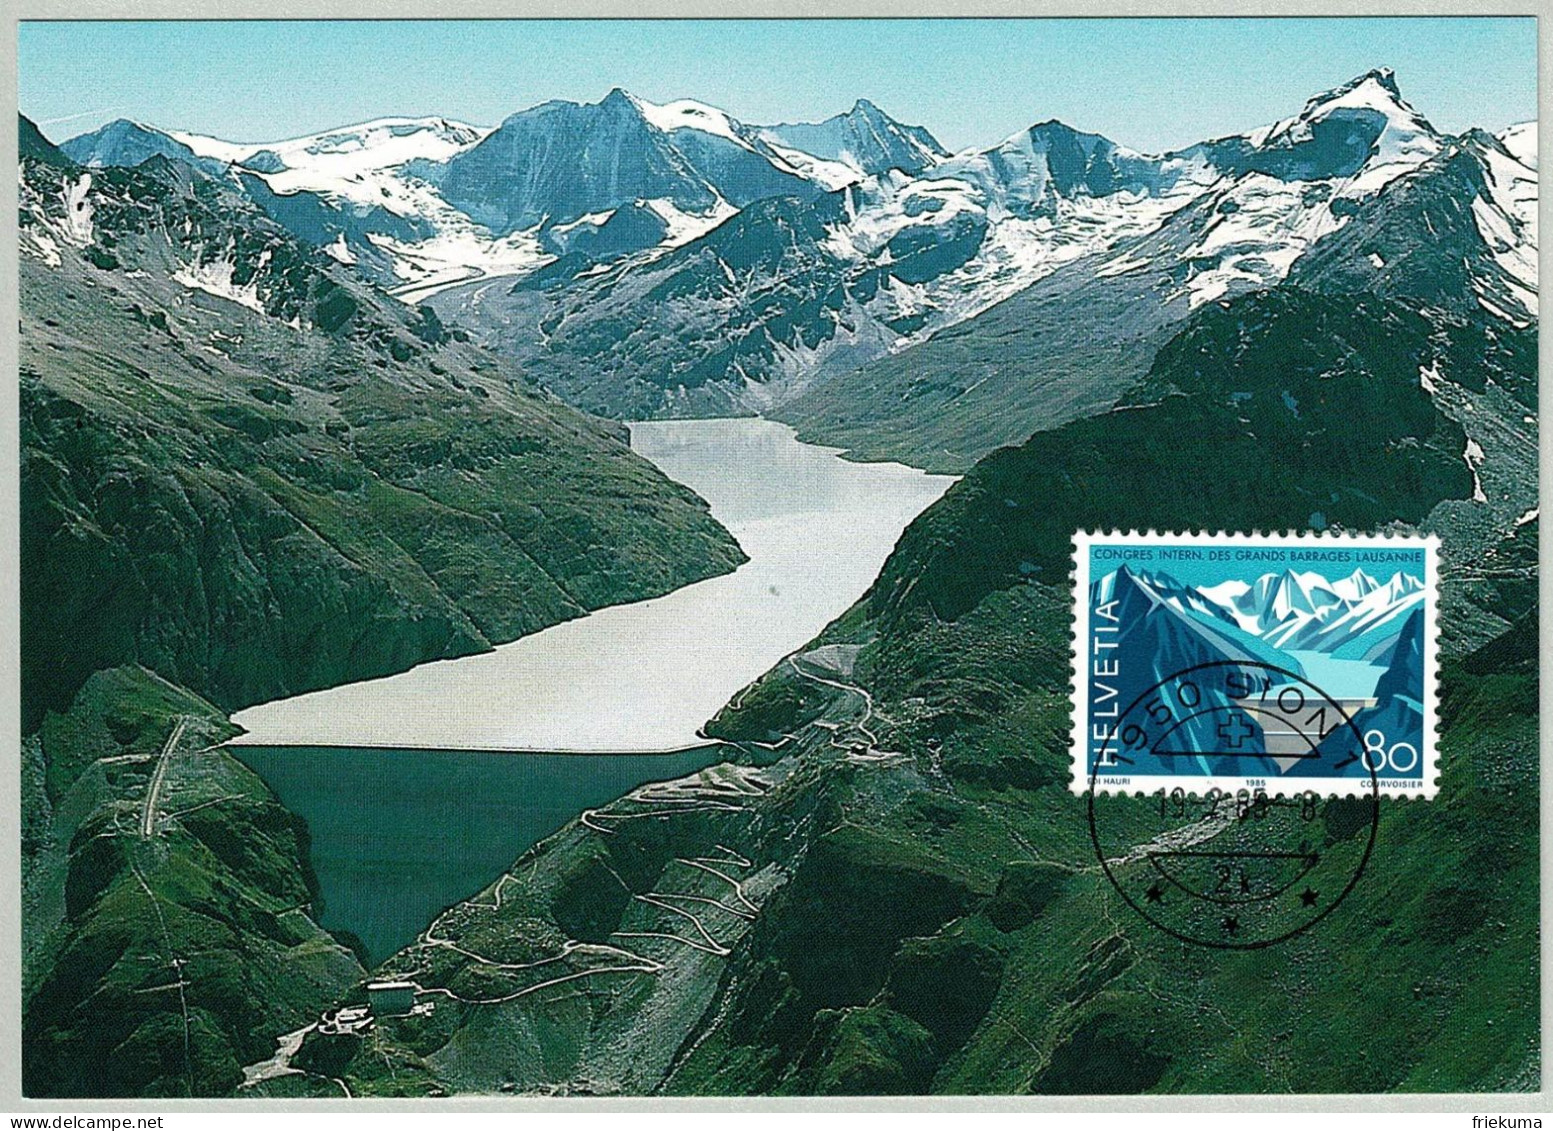 Schweiz / Helvetia 1985, Maximumkarte Kongress Für Talsperren Lausanne, Staumauer Grand-Dixence, Barrage / Dam, Sion - Water